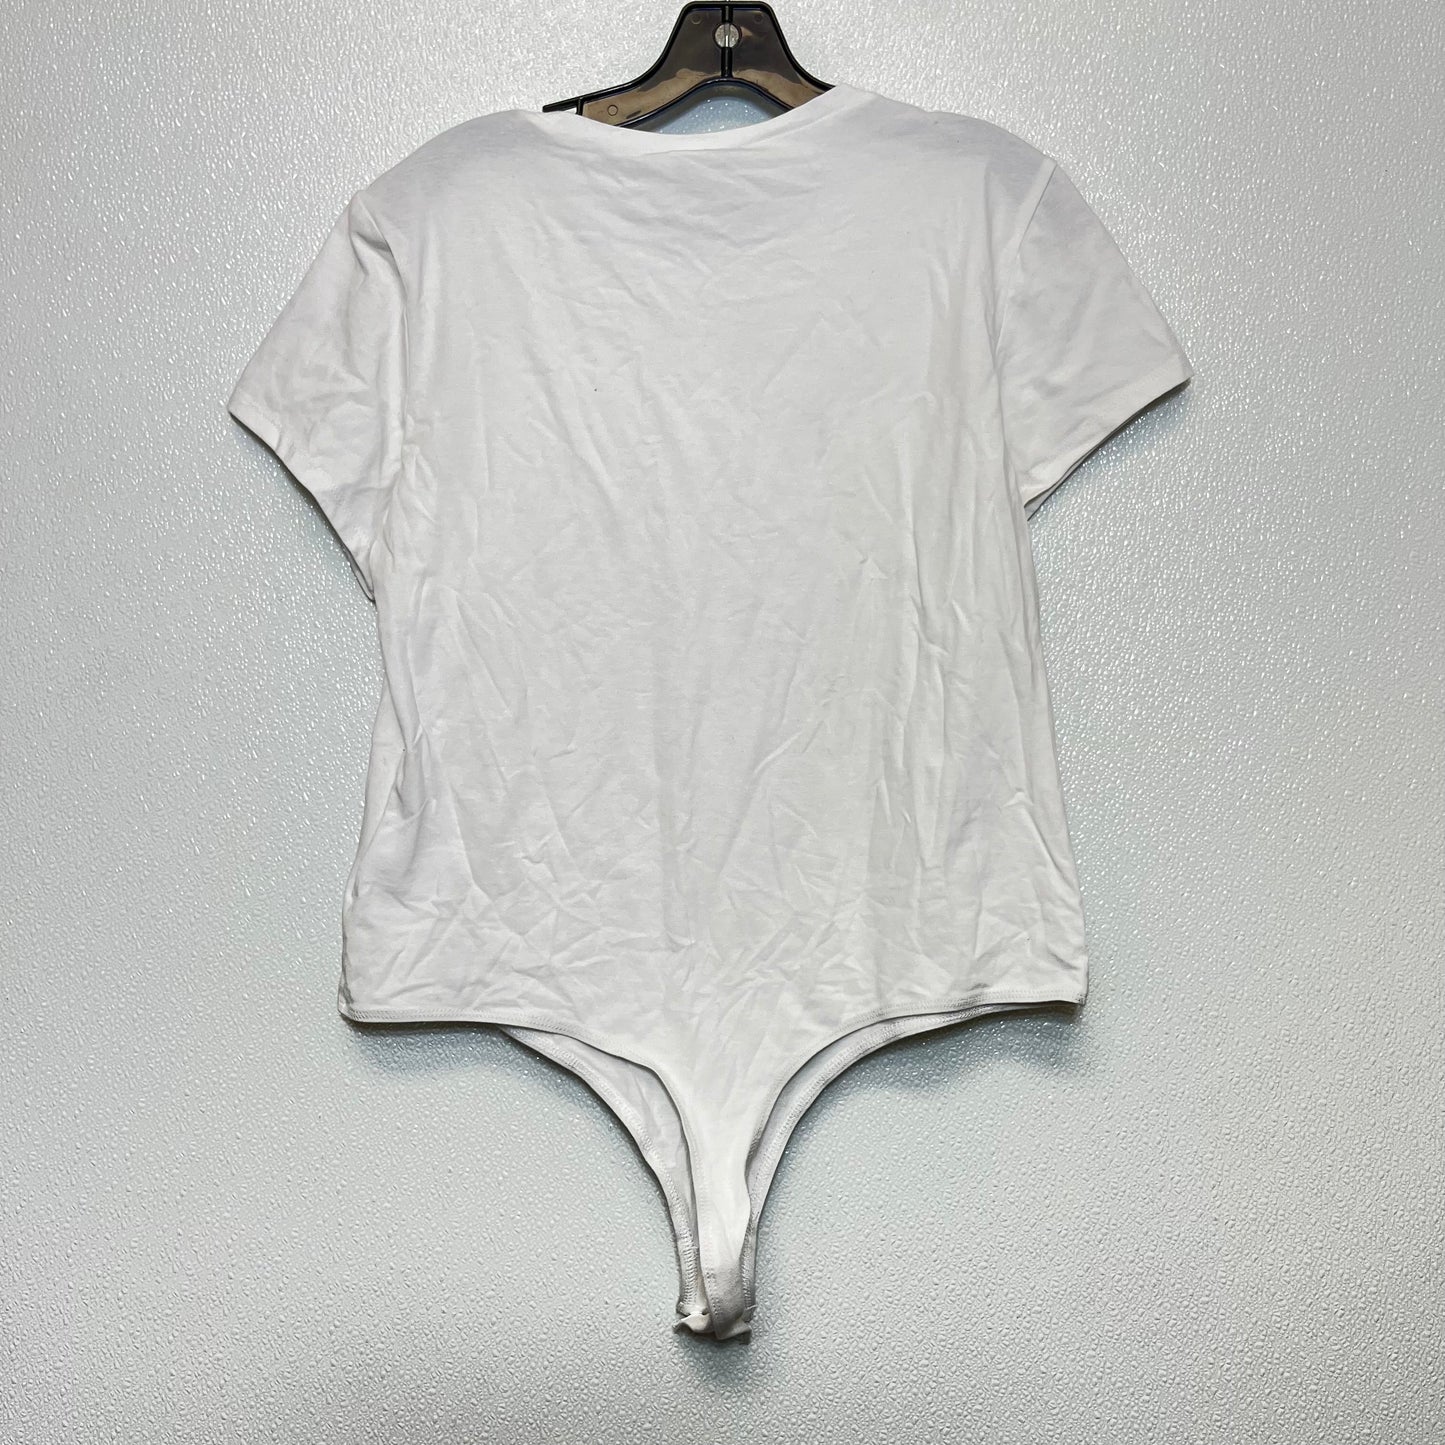 Bodysuit By Clothes Mentor  Size: Xl